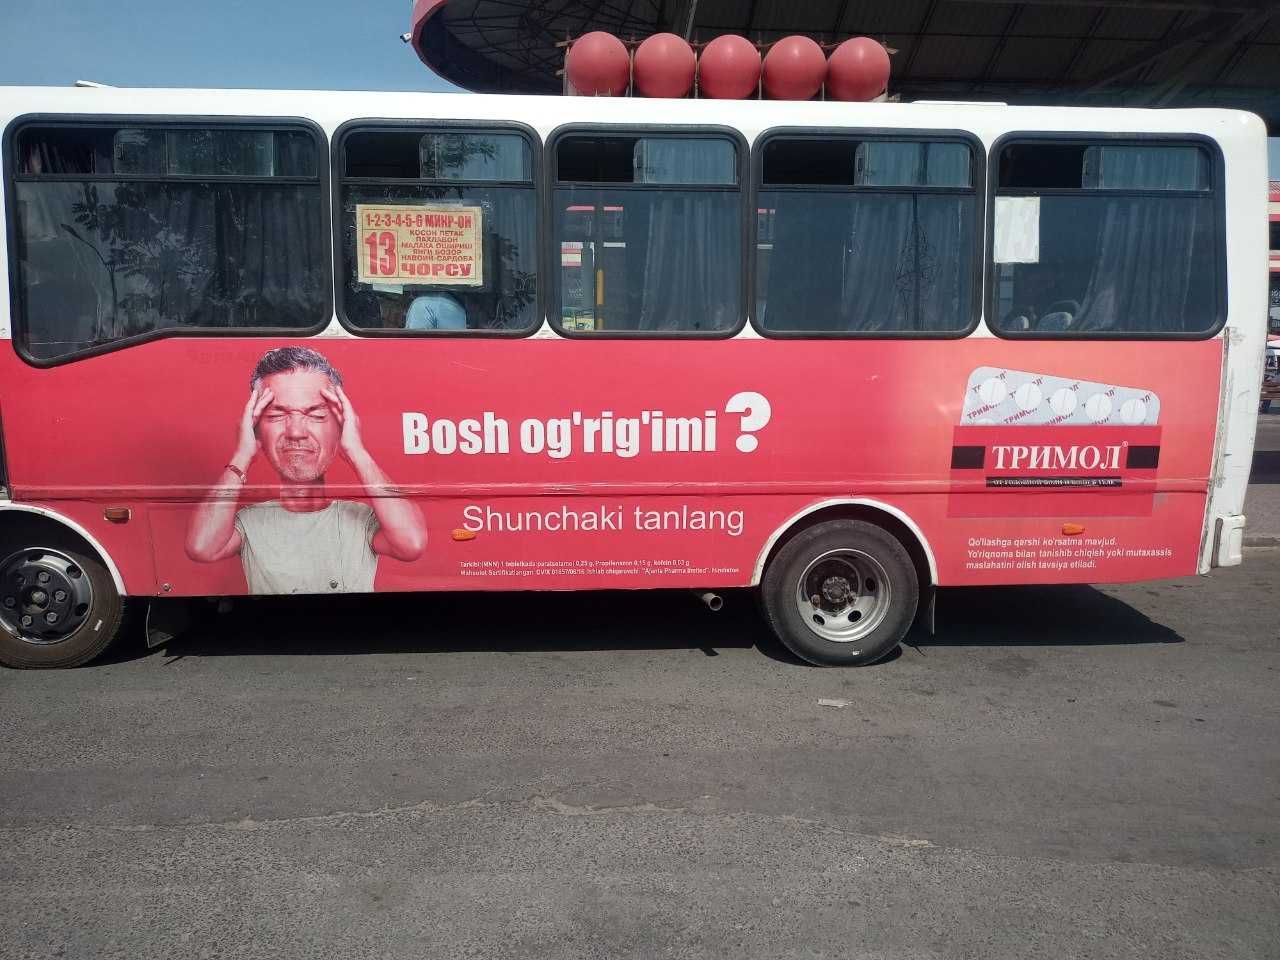 Avtobuslarda reklama xizmati Рекламный услуги на автобусах